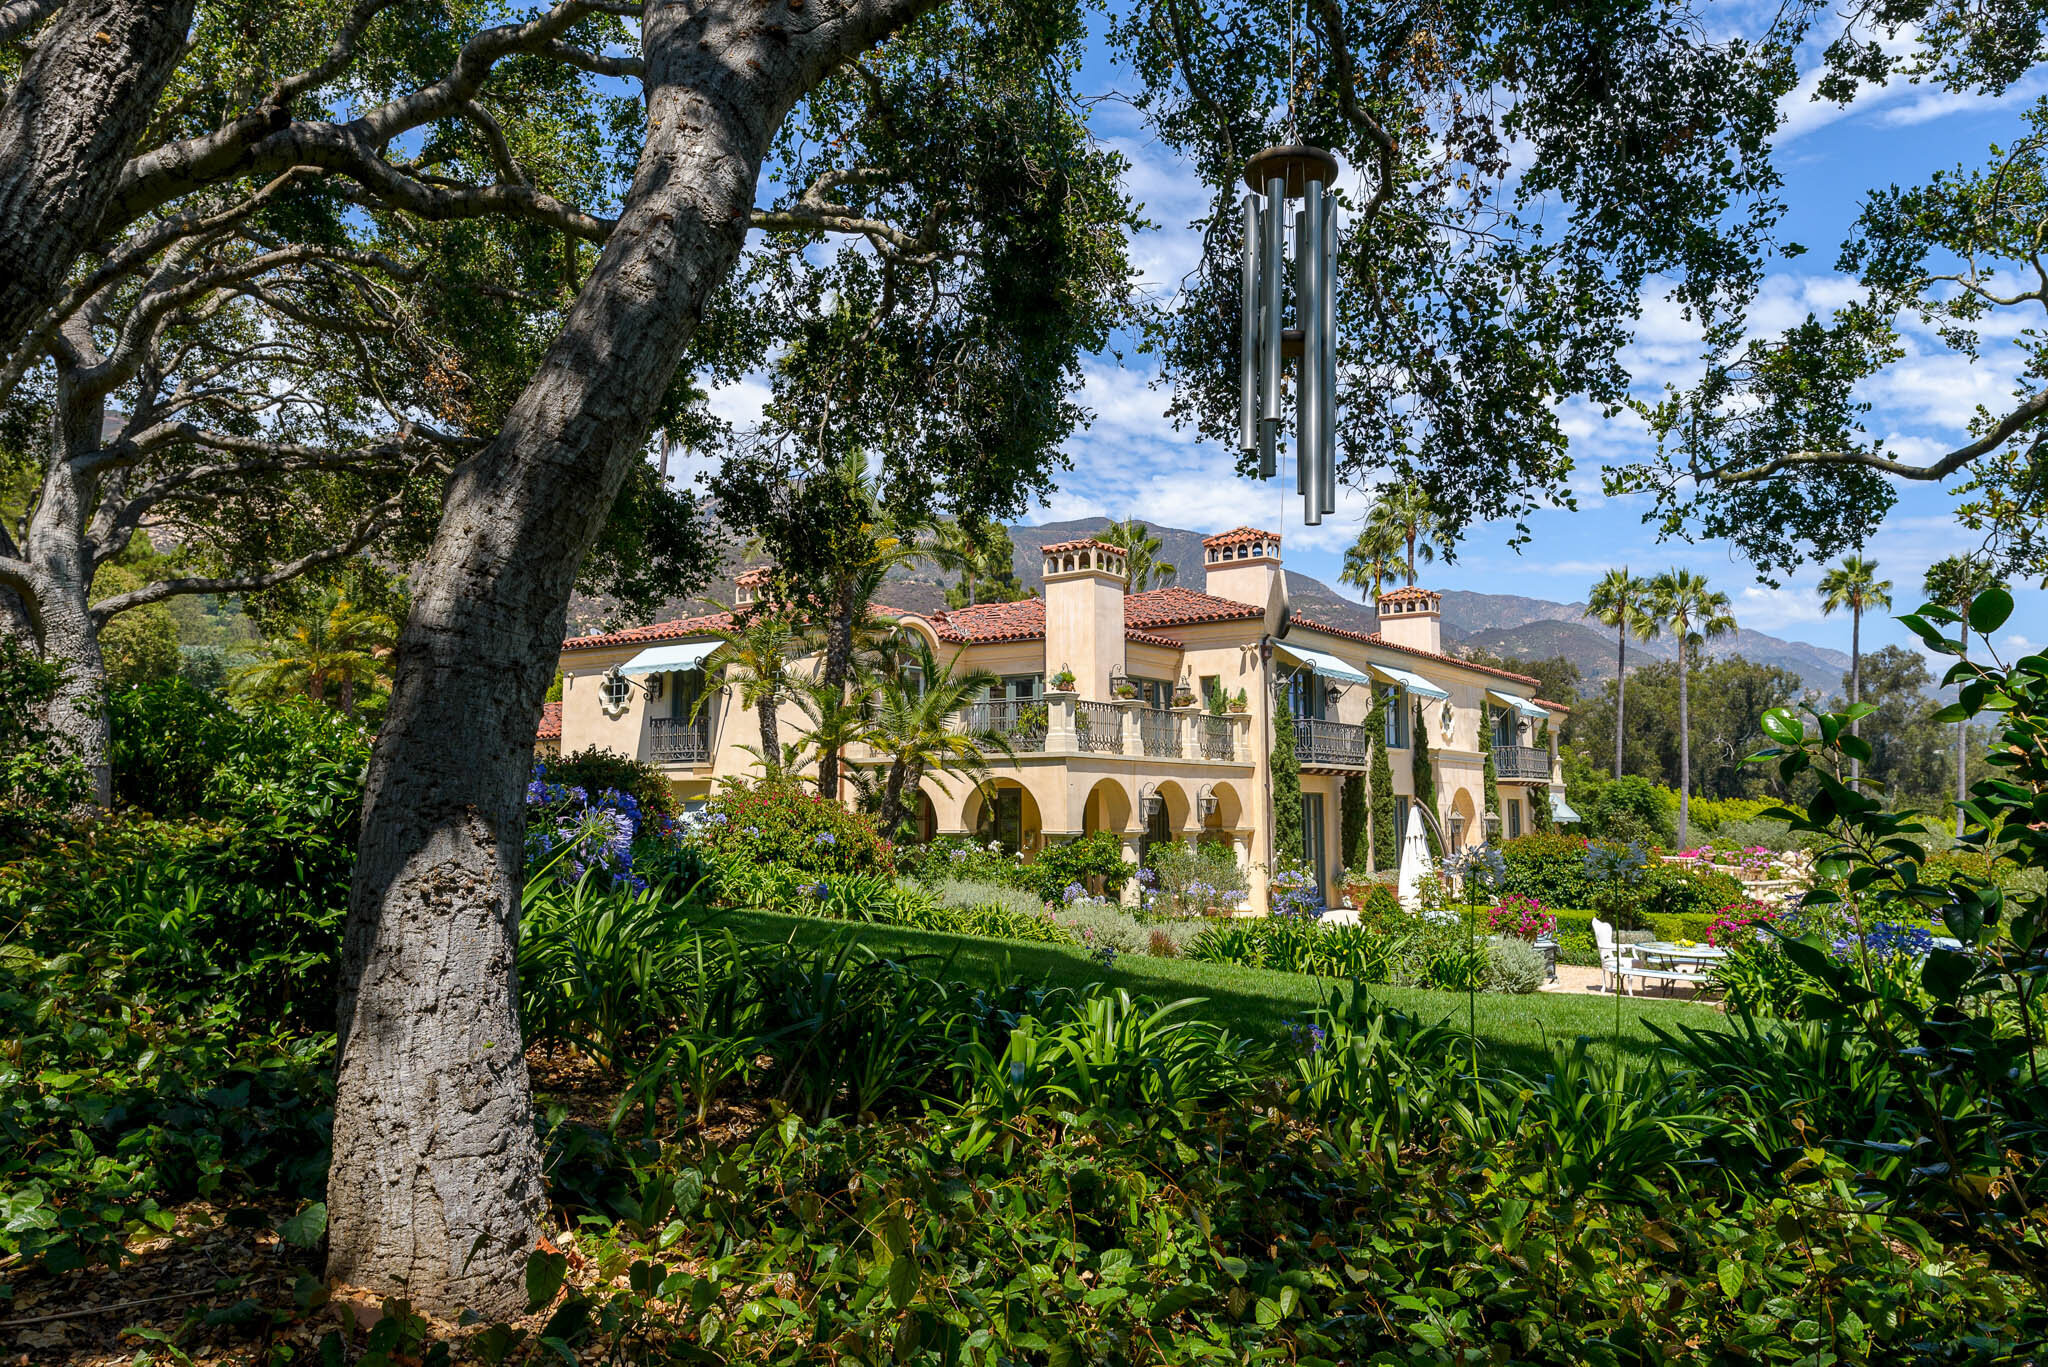 Francis York Casa Leo Linda, a Montecito Mediterranean Mansion1.jpg